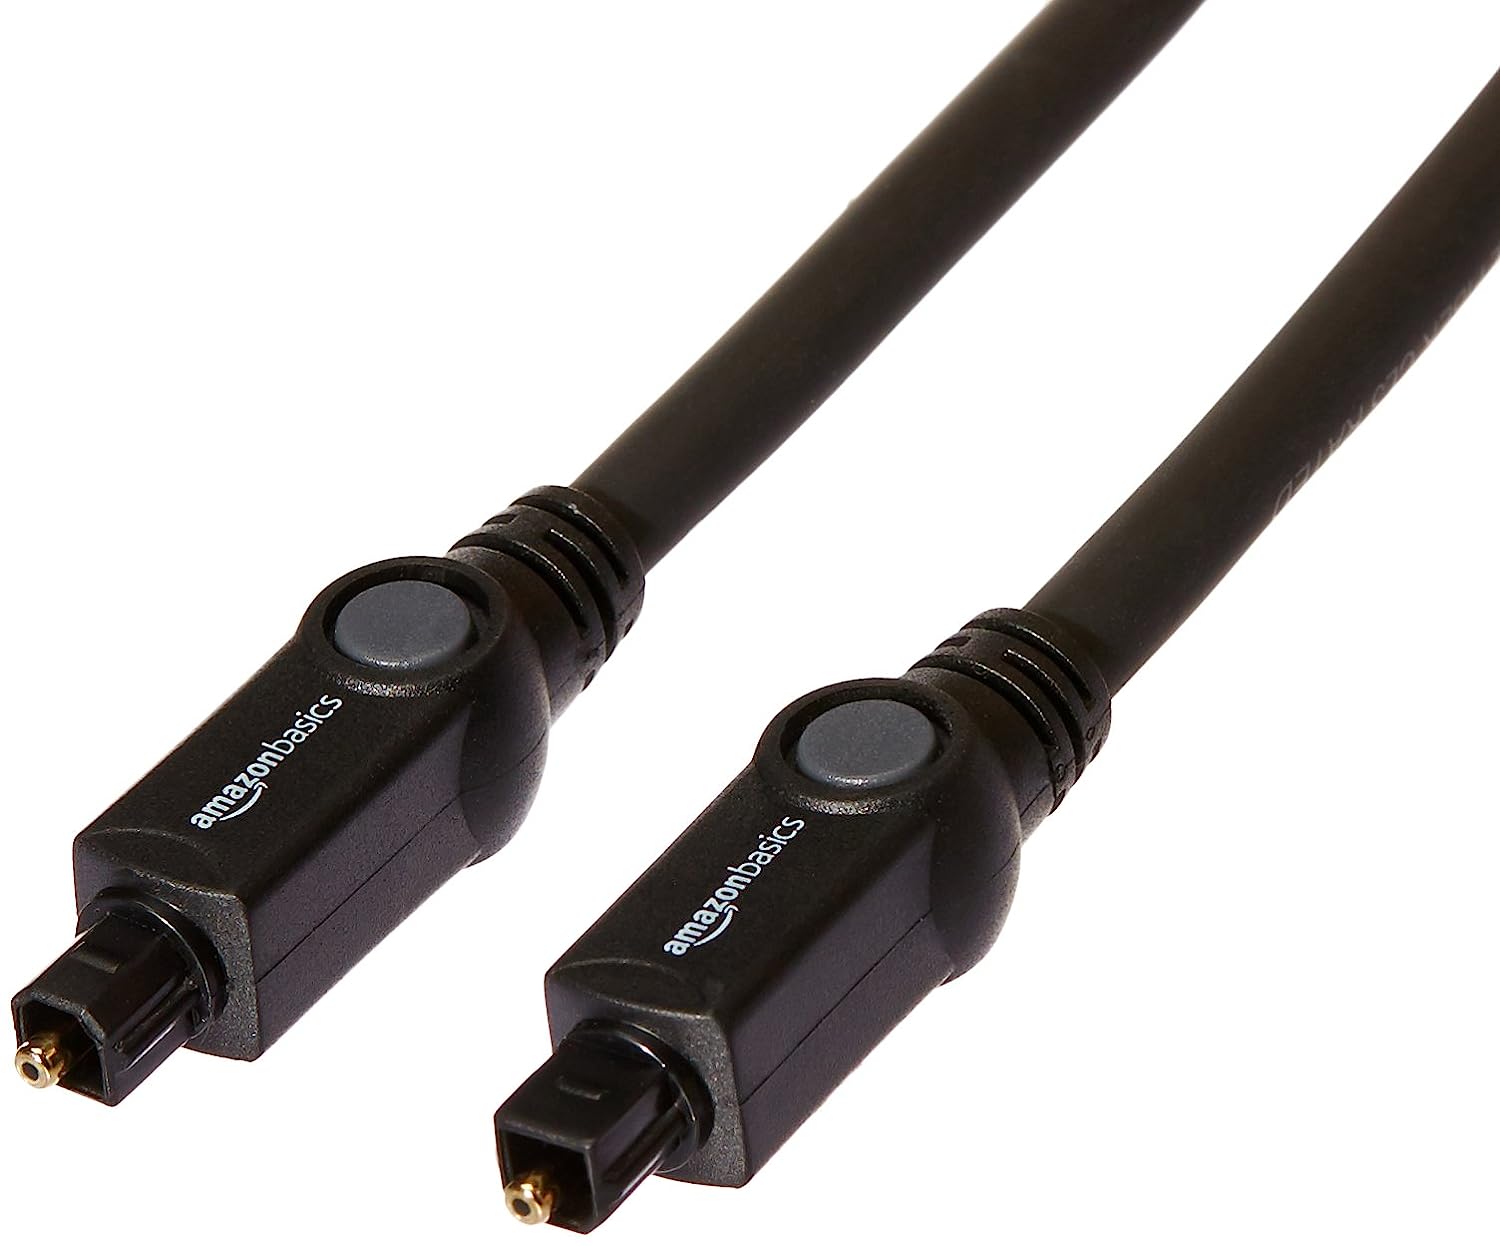 Amazon Basics Toslink Digital Optical Audio Cable, CL3 [...]